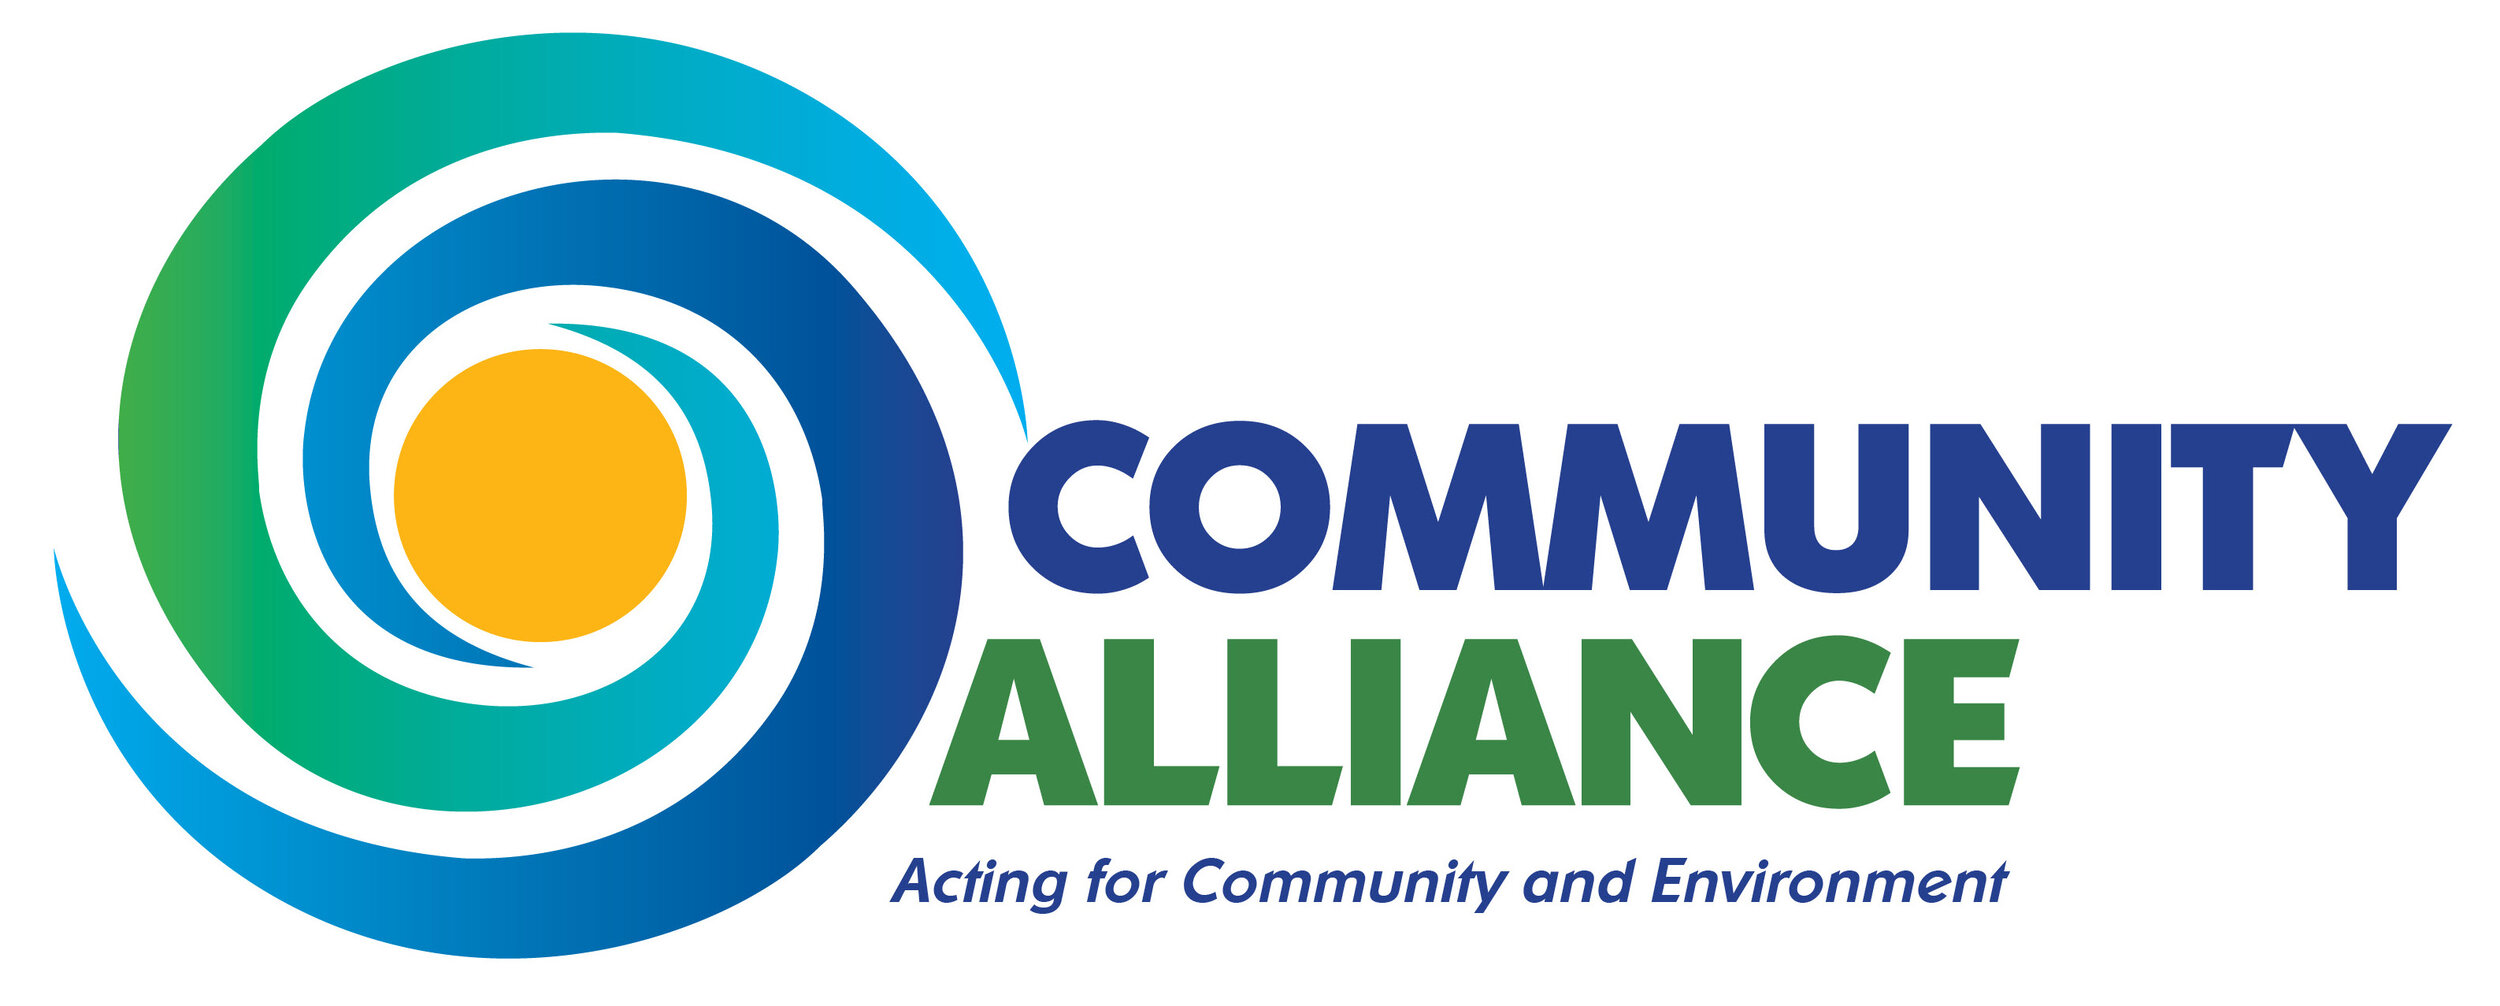 Community Alliance